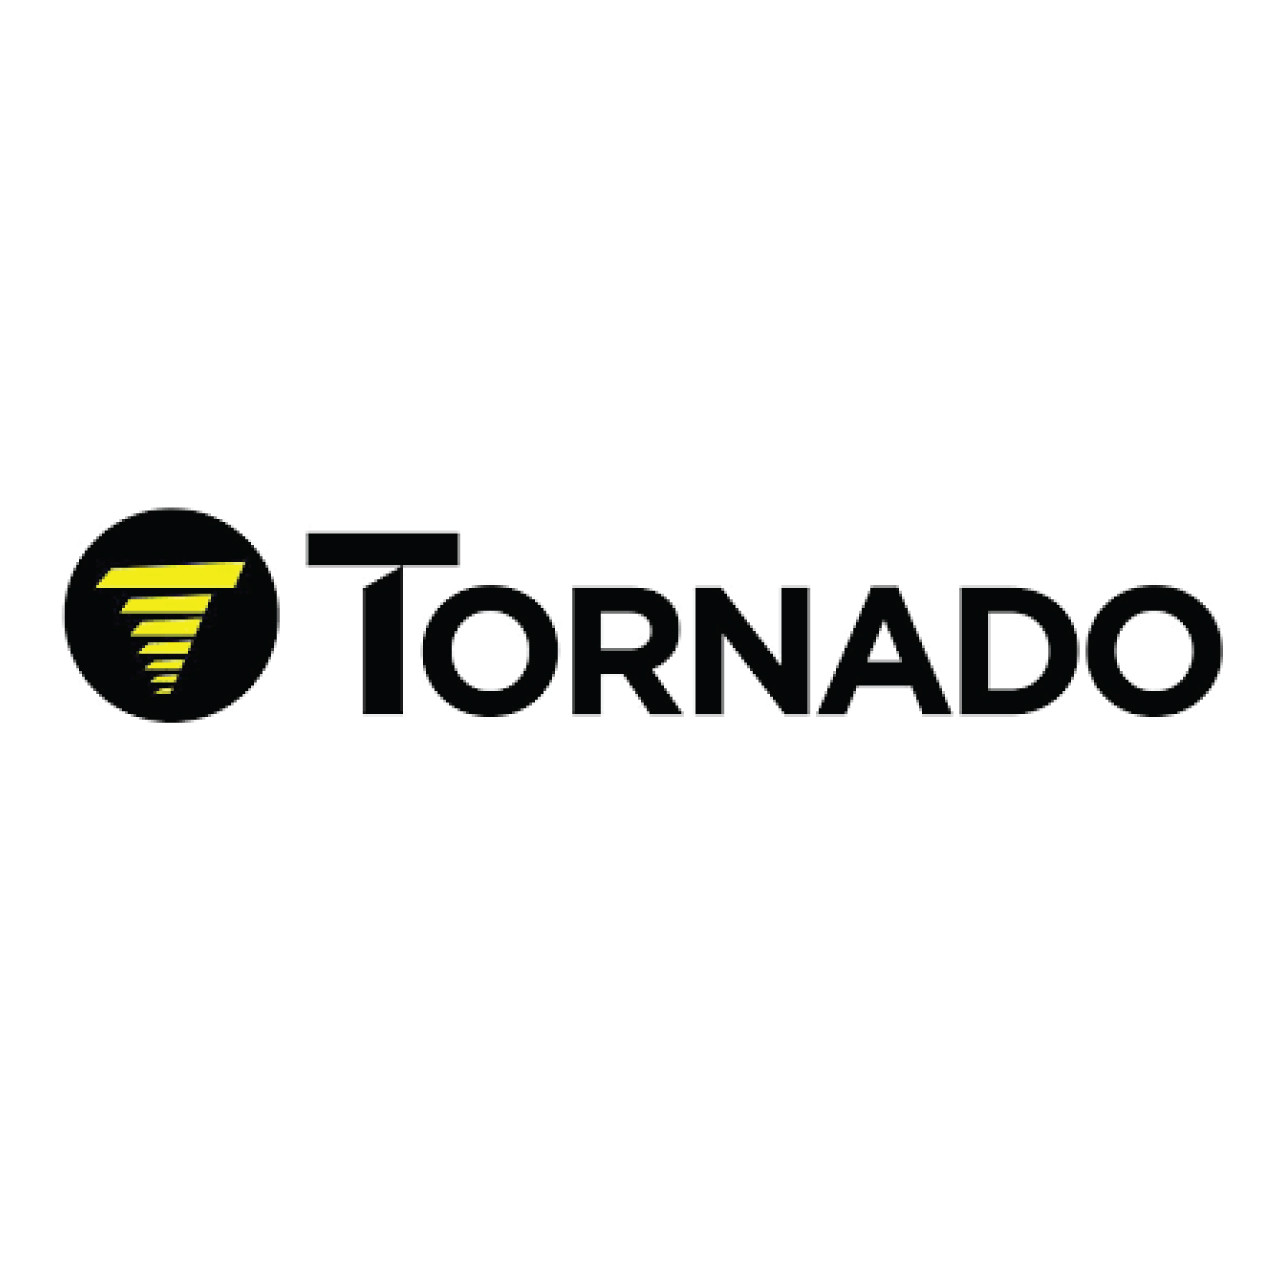 854503, Tornado 854503, Tornado 20 ORBITAL HEAD ASSEMBLY, Tornado parts